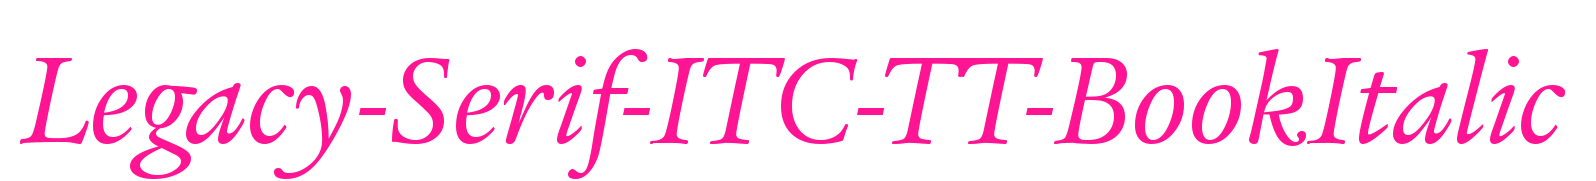 Legacy-Serif-ITC-TT-BookItalic